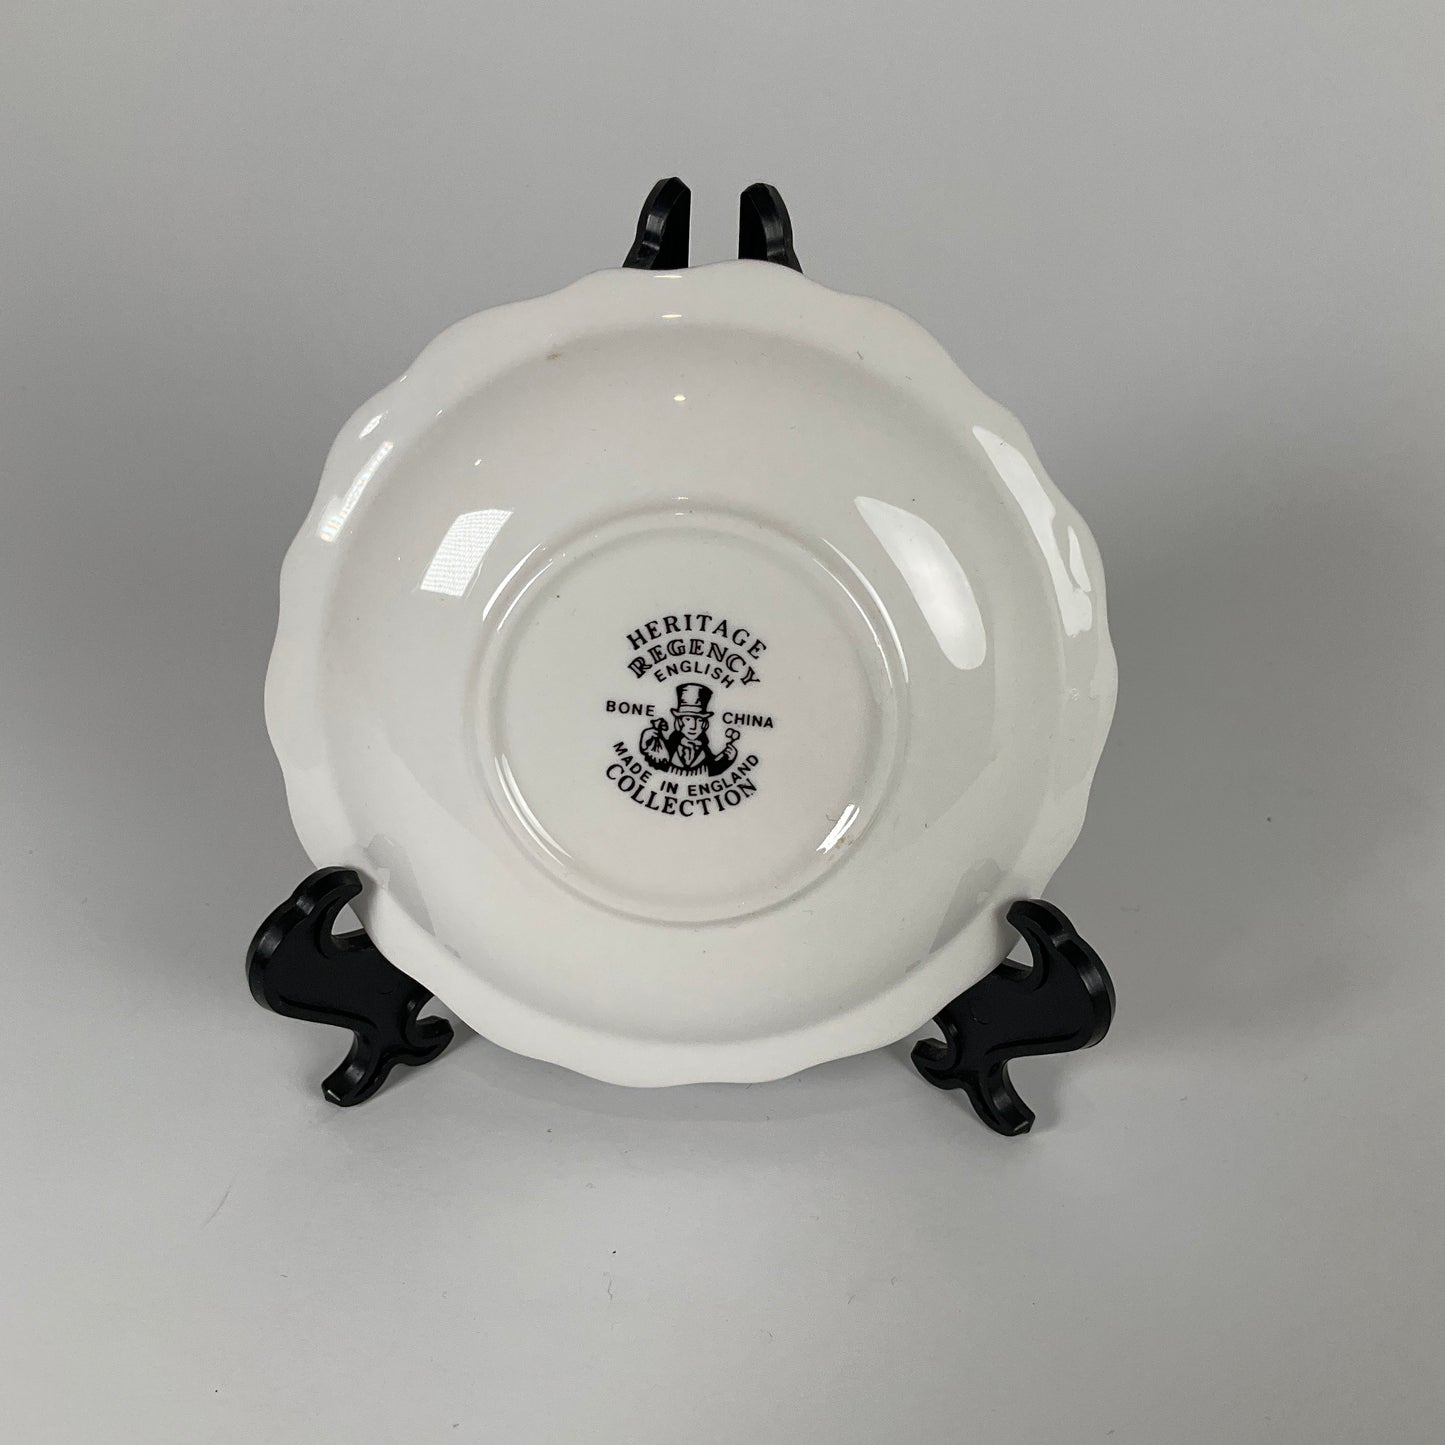 Heritage Regency - Miniature Decorative Plate Collectibles